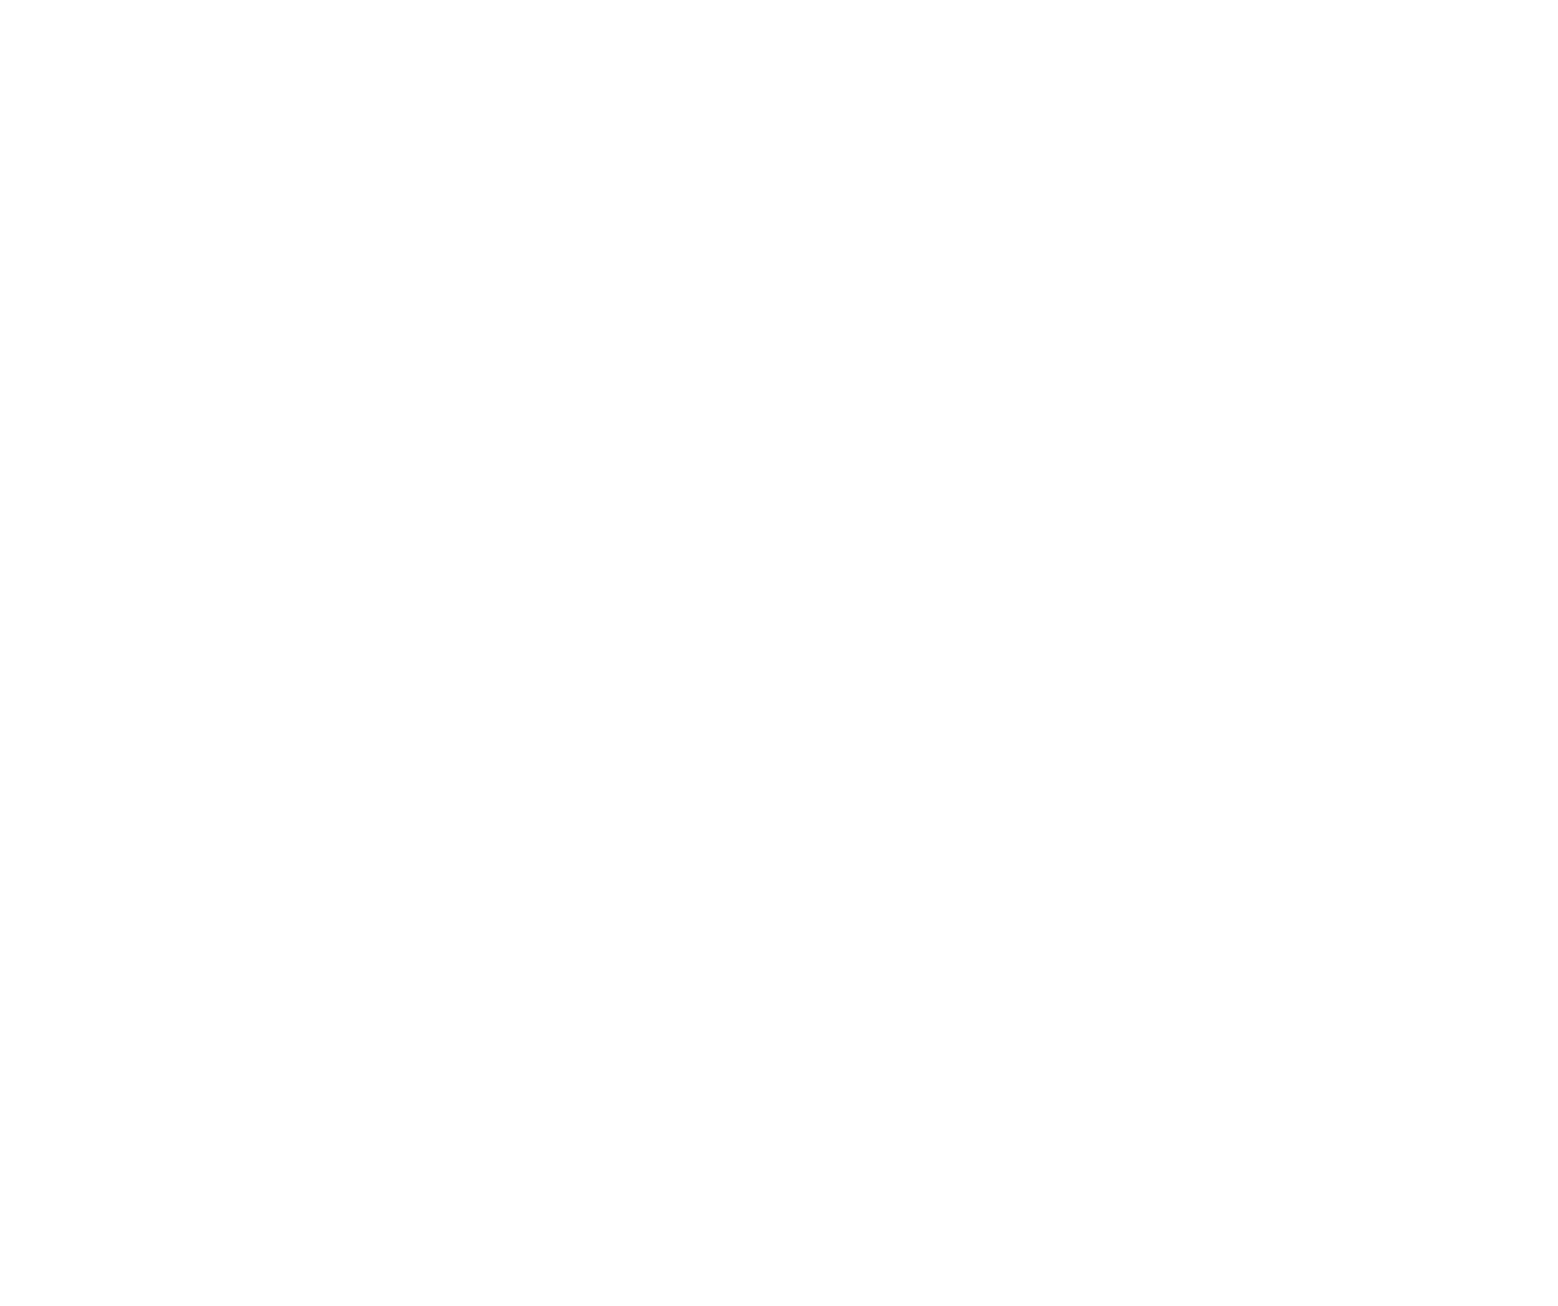 Artifex Mundi logo large for dark backgrounds (transparent PNG)